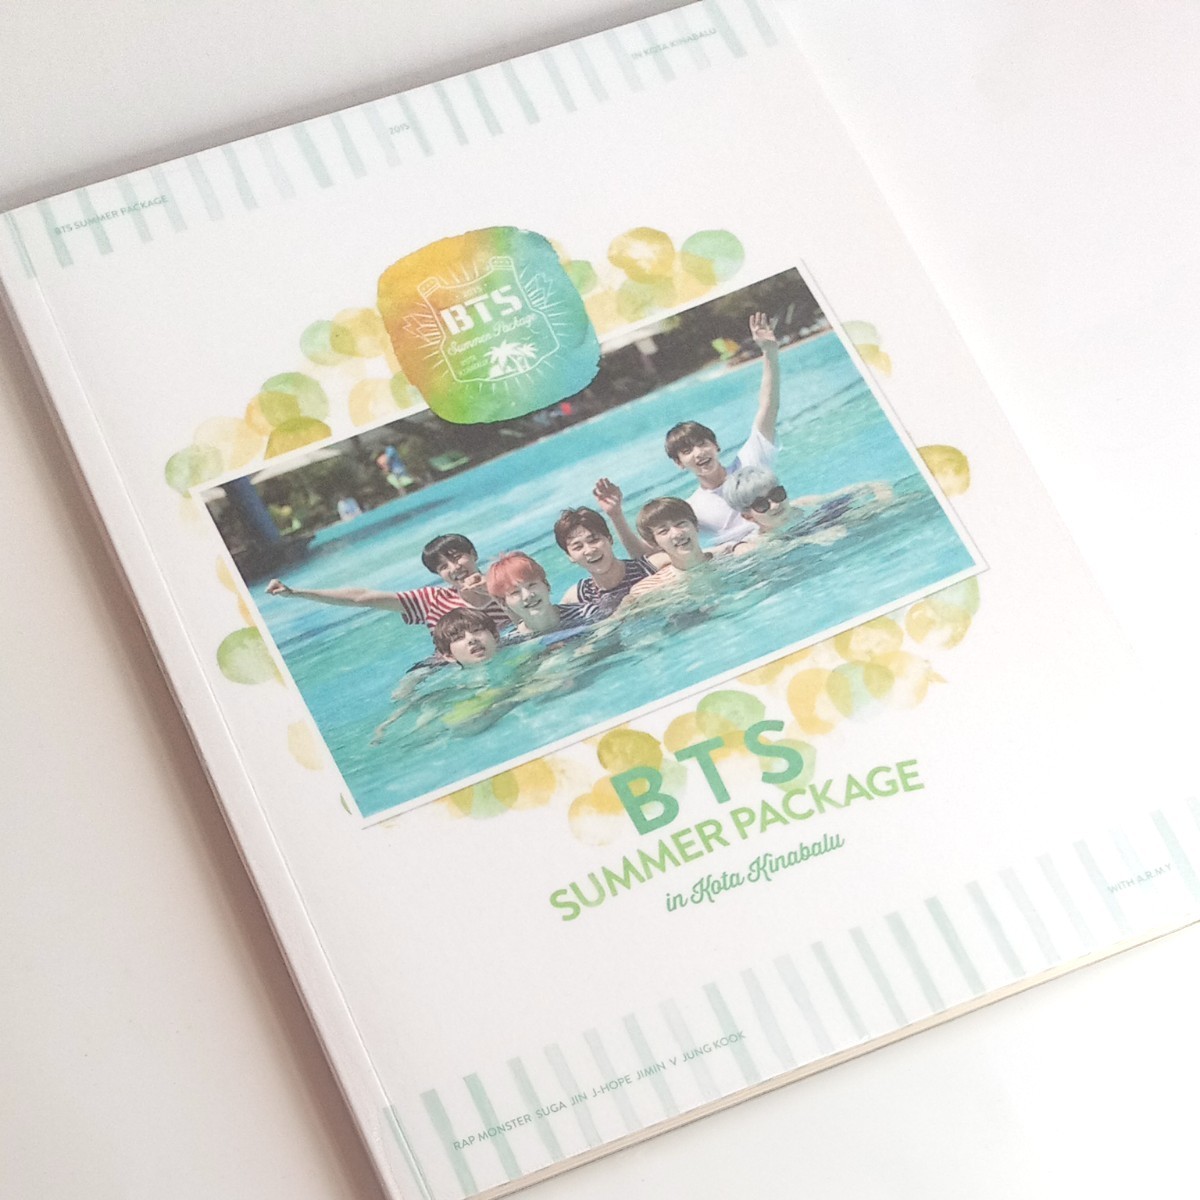 BTS 防弾少年団 2015 summer package サマーパッケージ サマパケ DVD